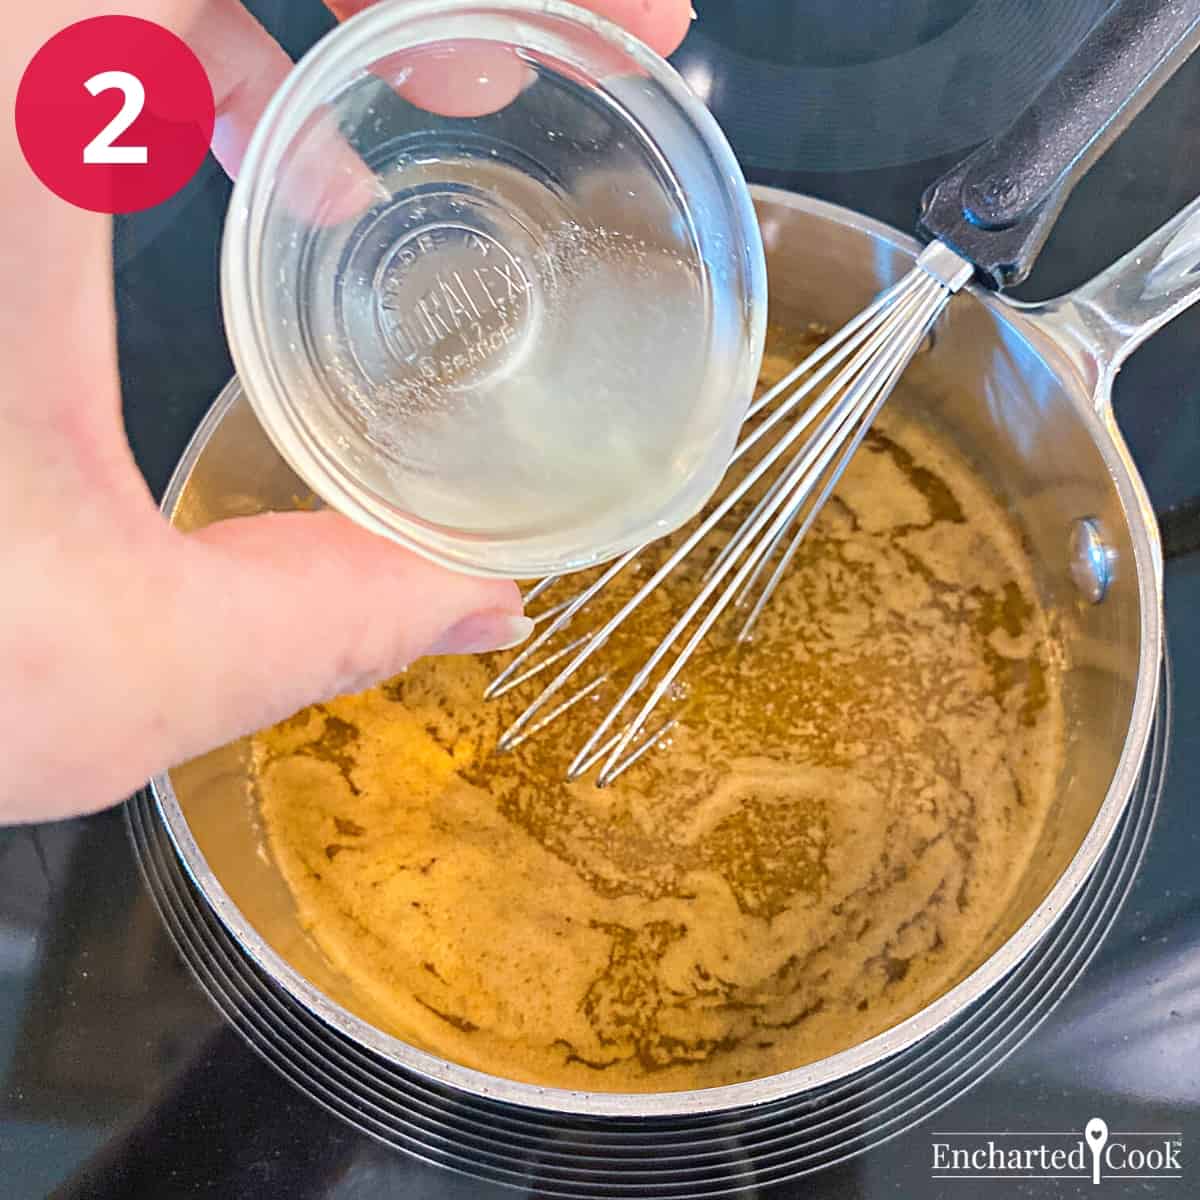 Adding lemon juice to the sauce.